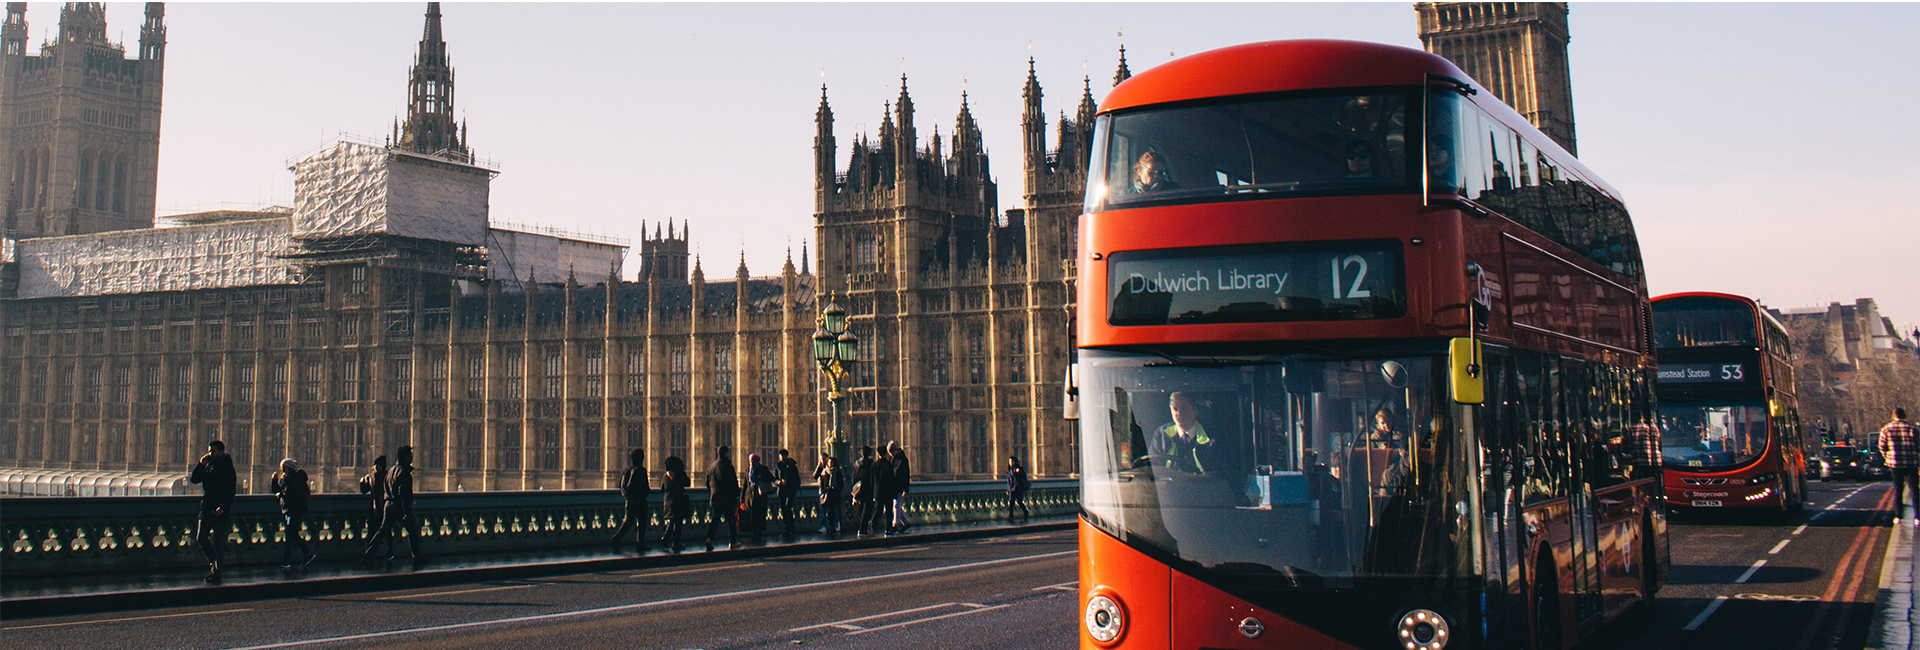 red-double-decker-bus-london